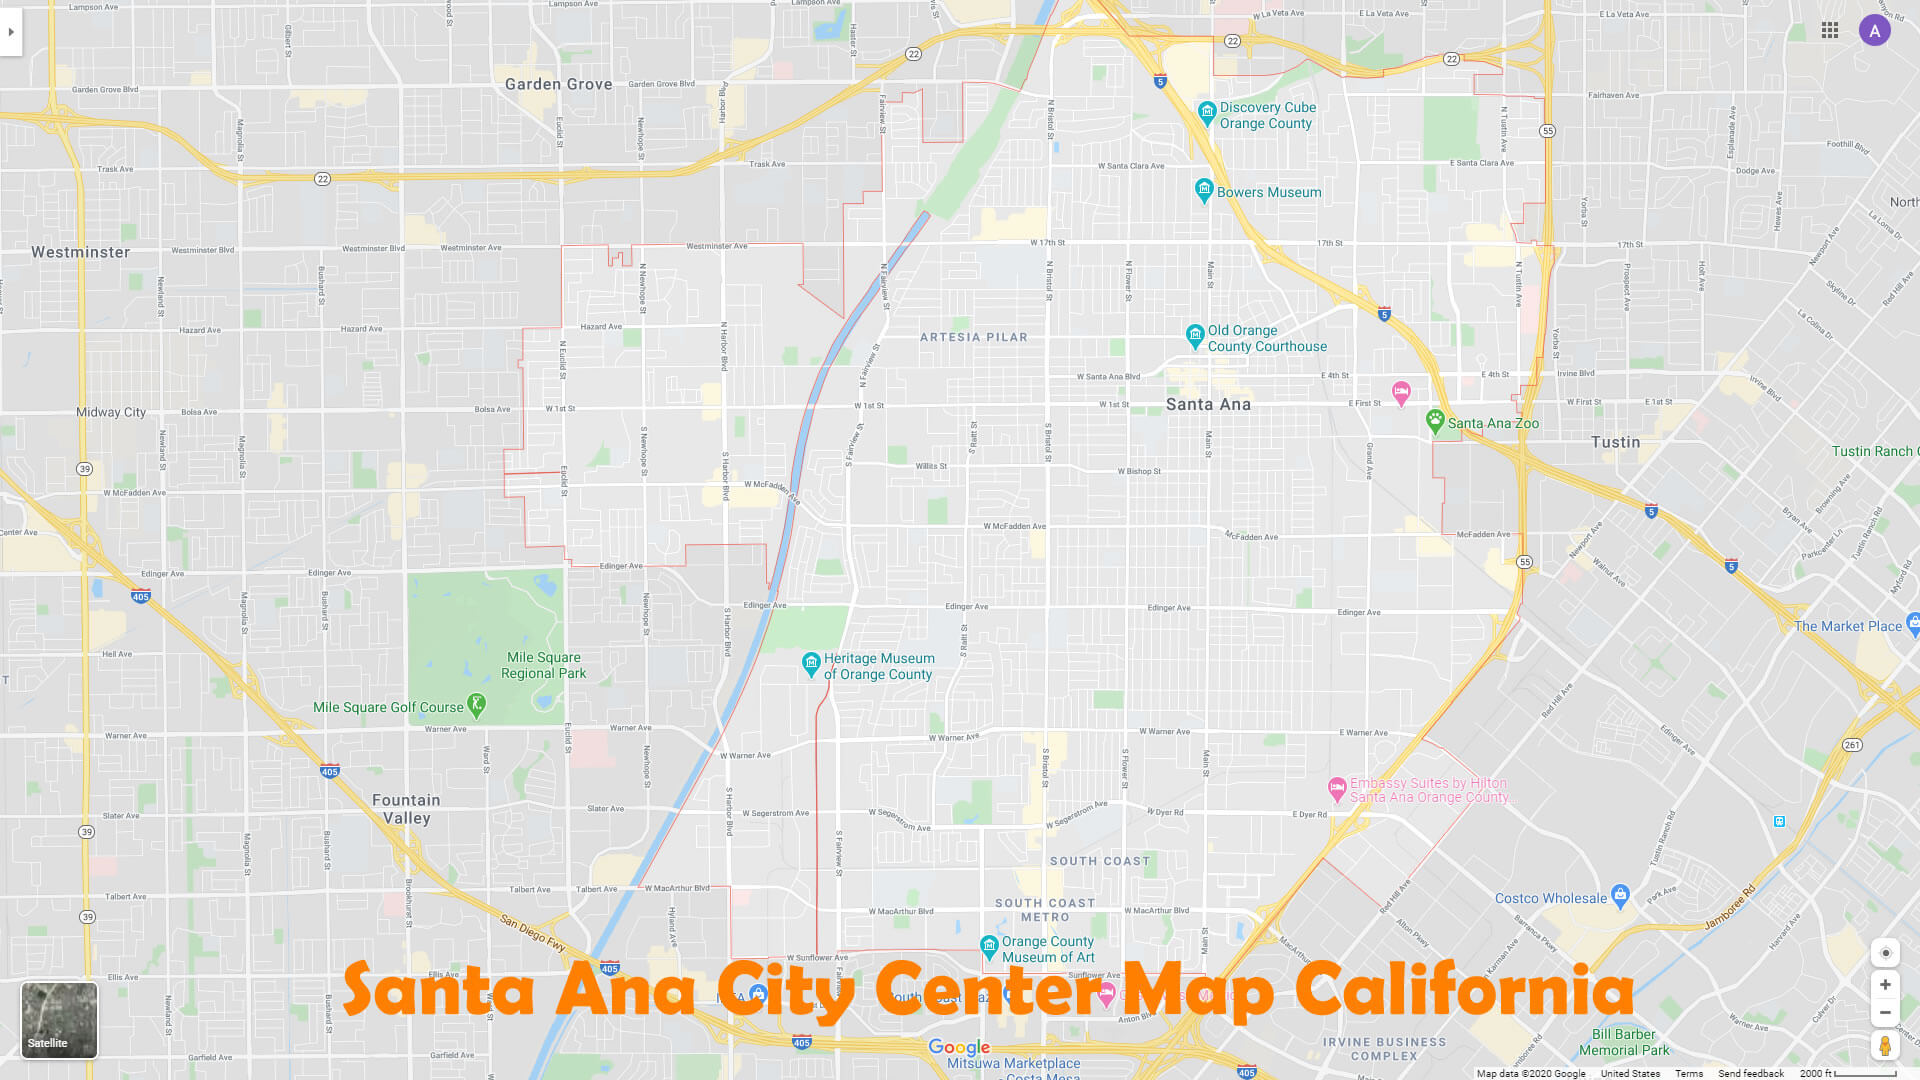 Santa Ana City Center Map California